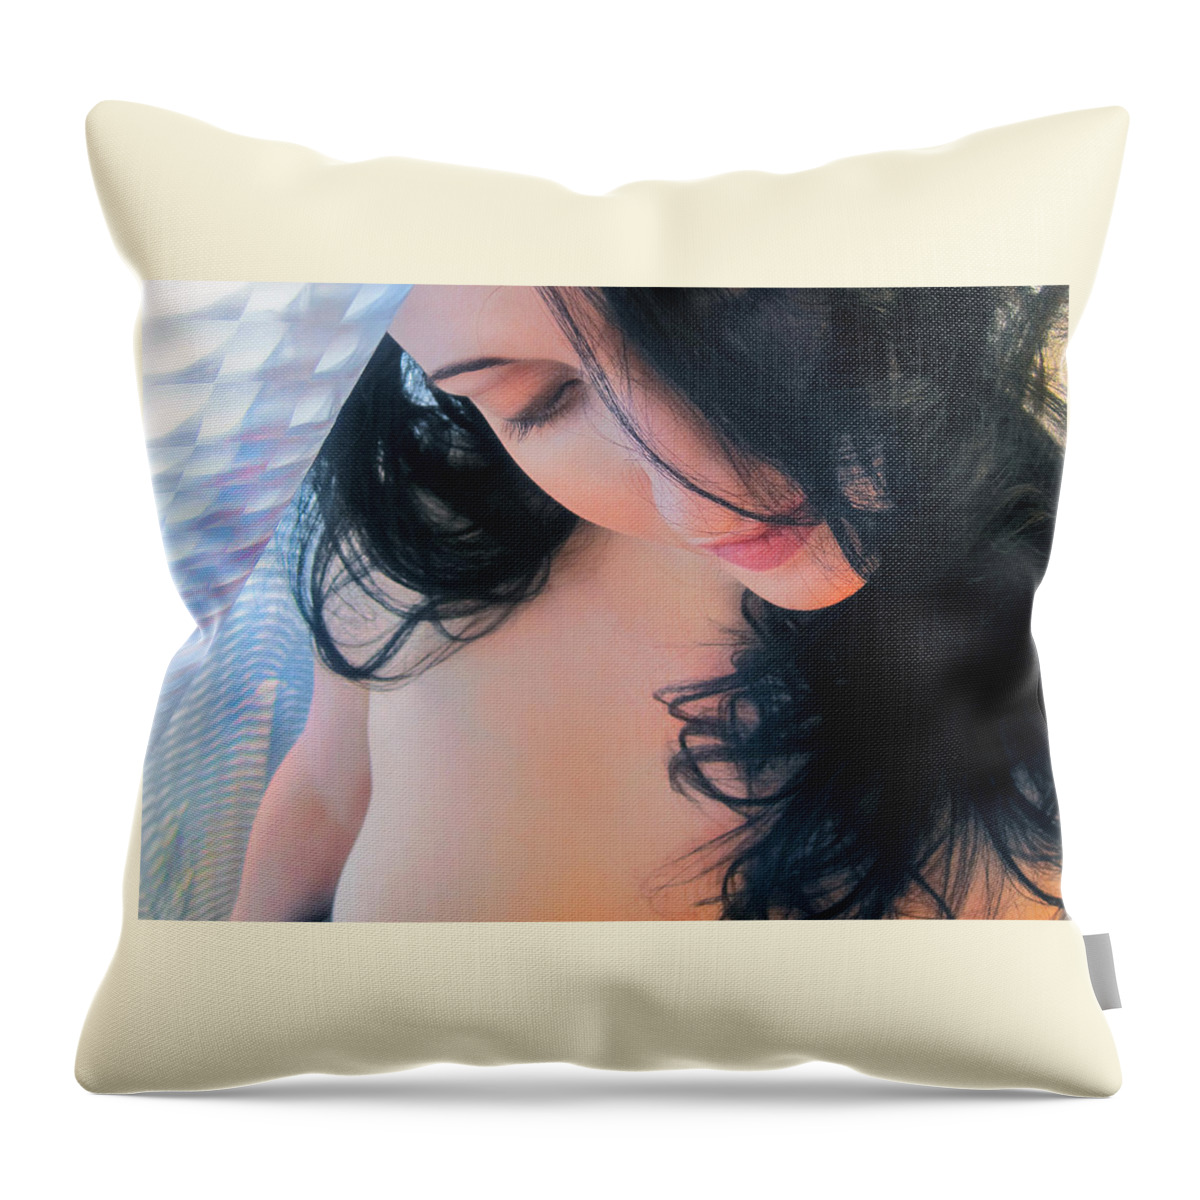  Beautiful Throw Pillow featuring the photograph Summer Love by Jaeda DeWalt